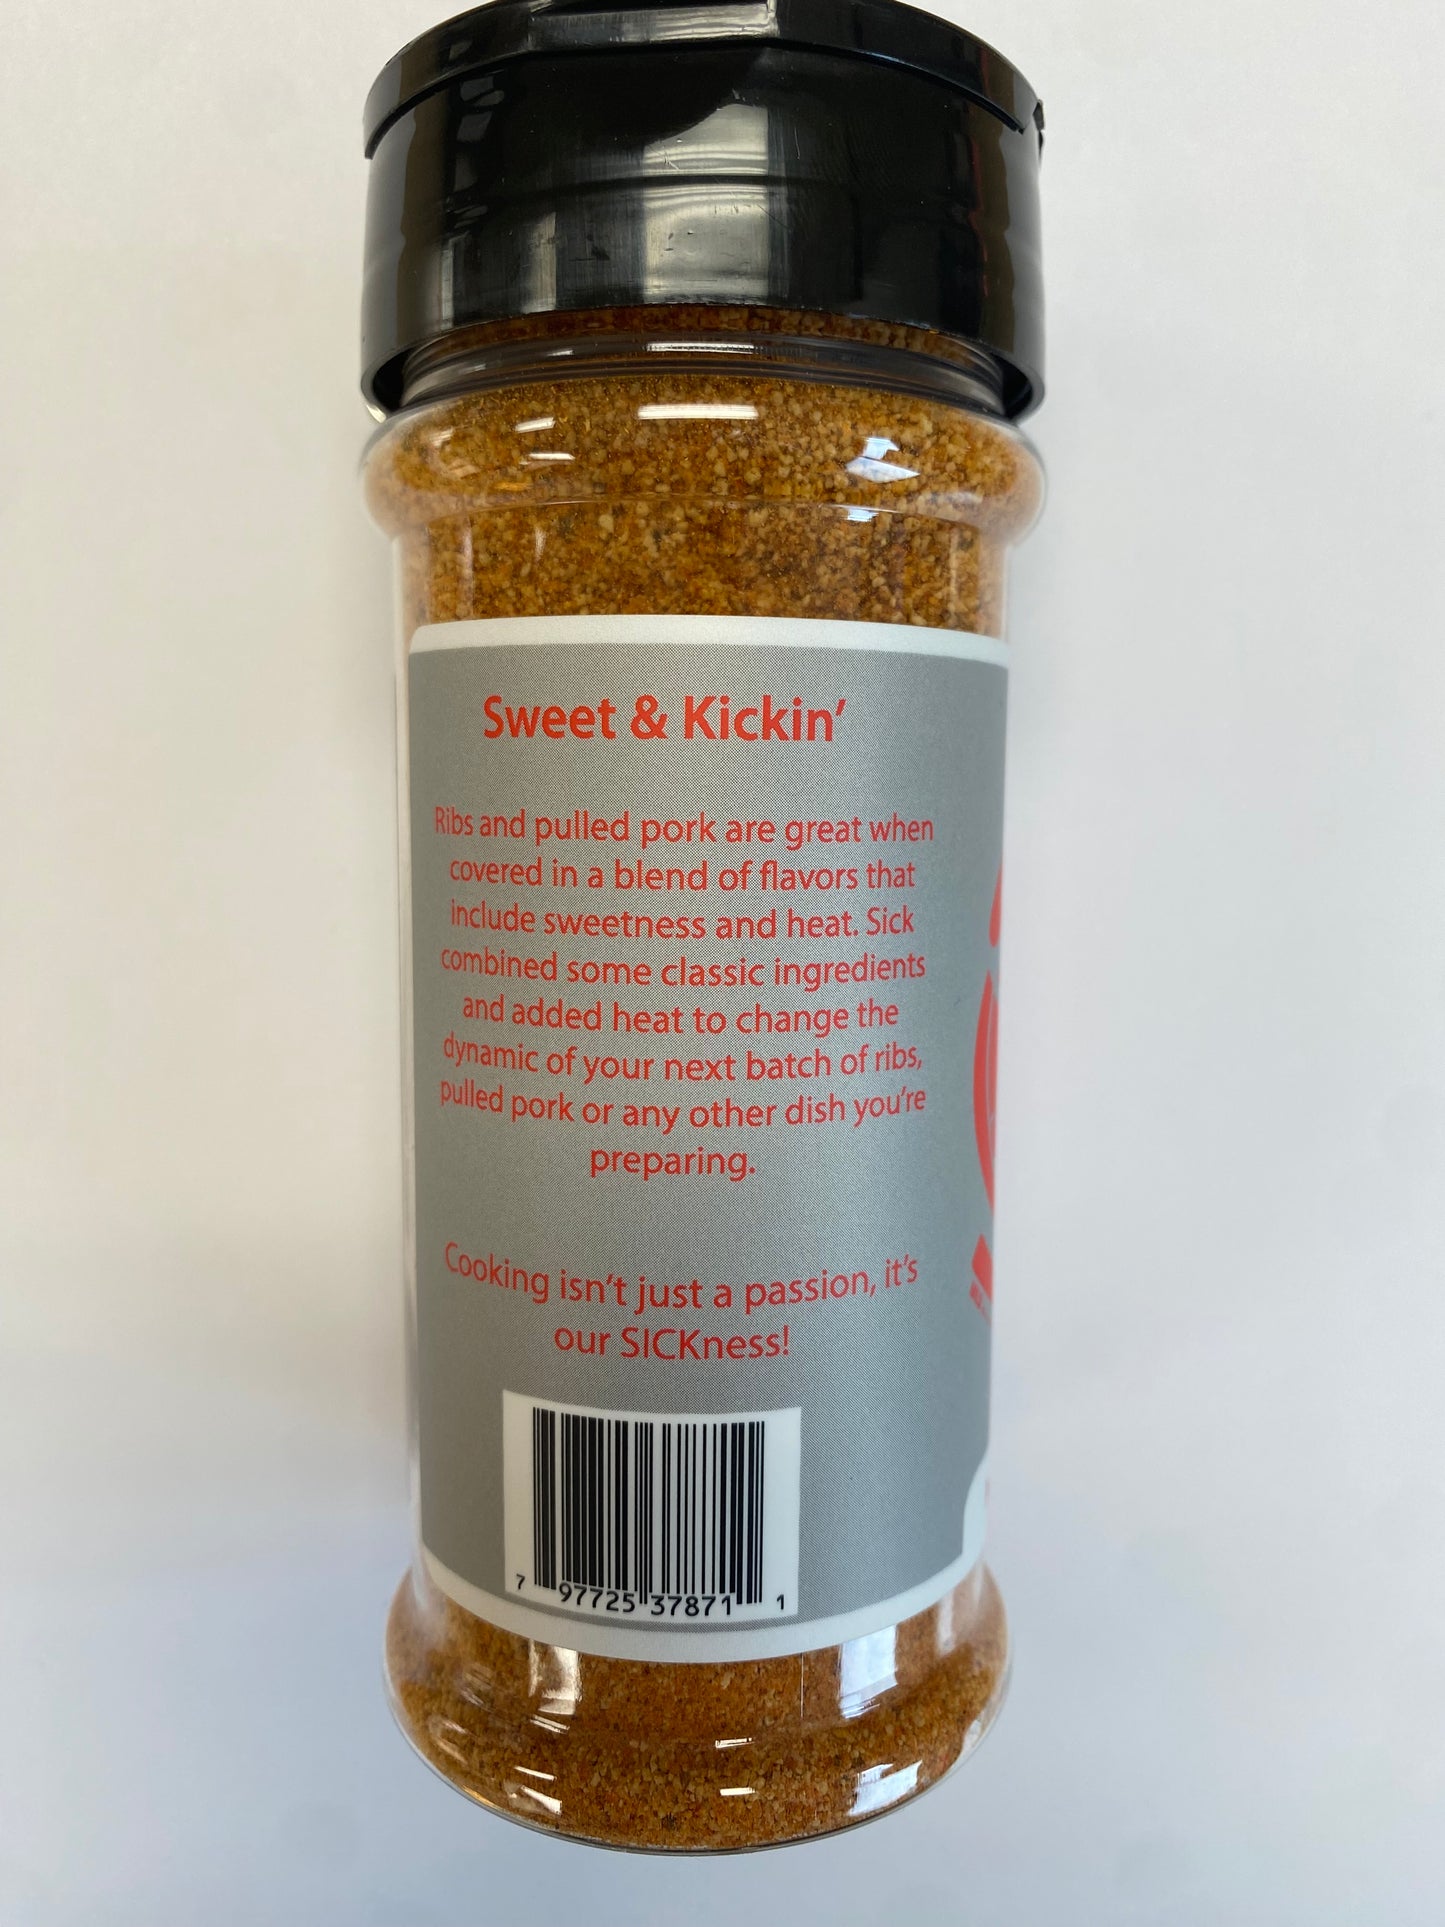 "Sweet and Kickin" Sick Spice